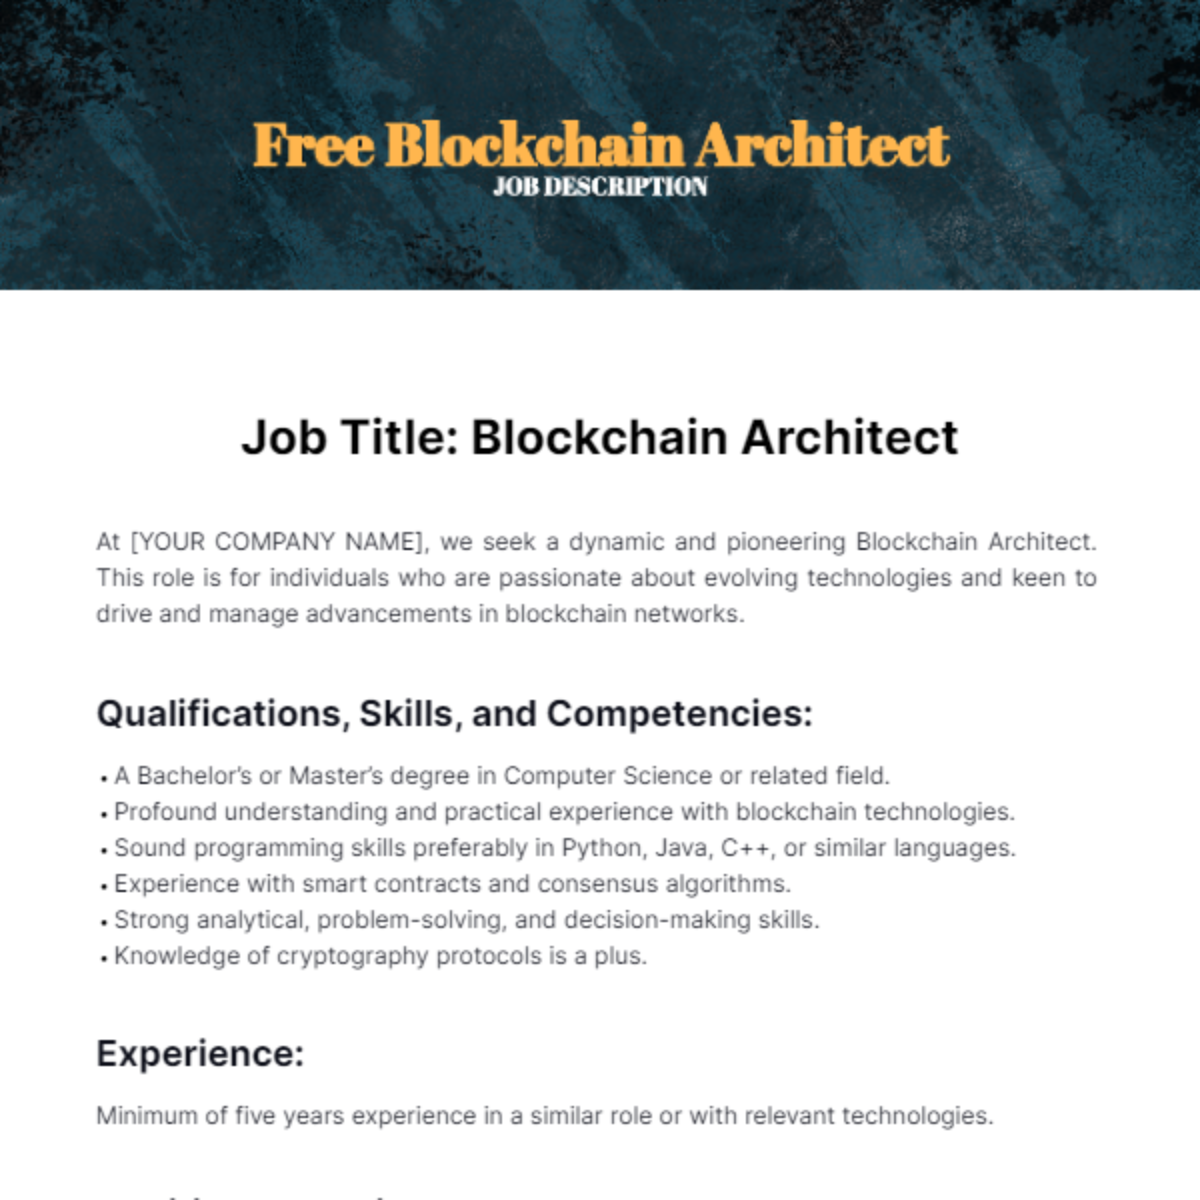 Free Blockchain Architect Job Description Template